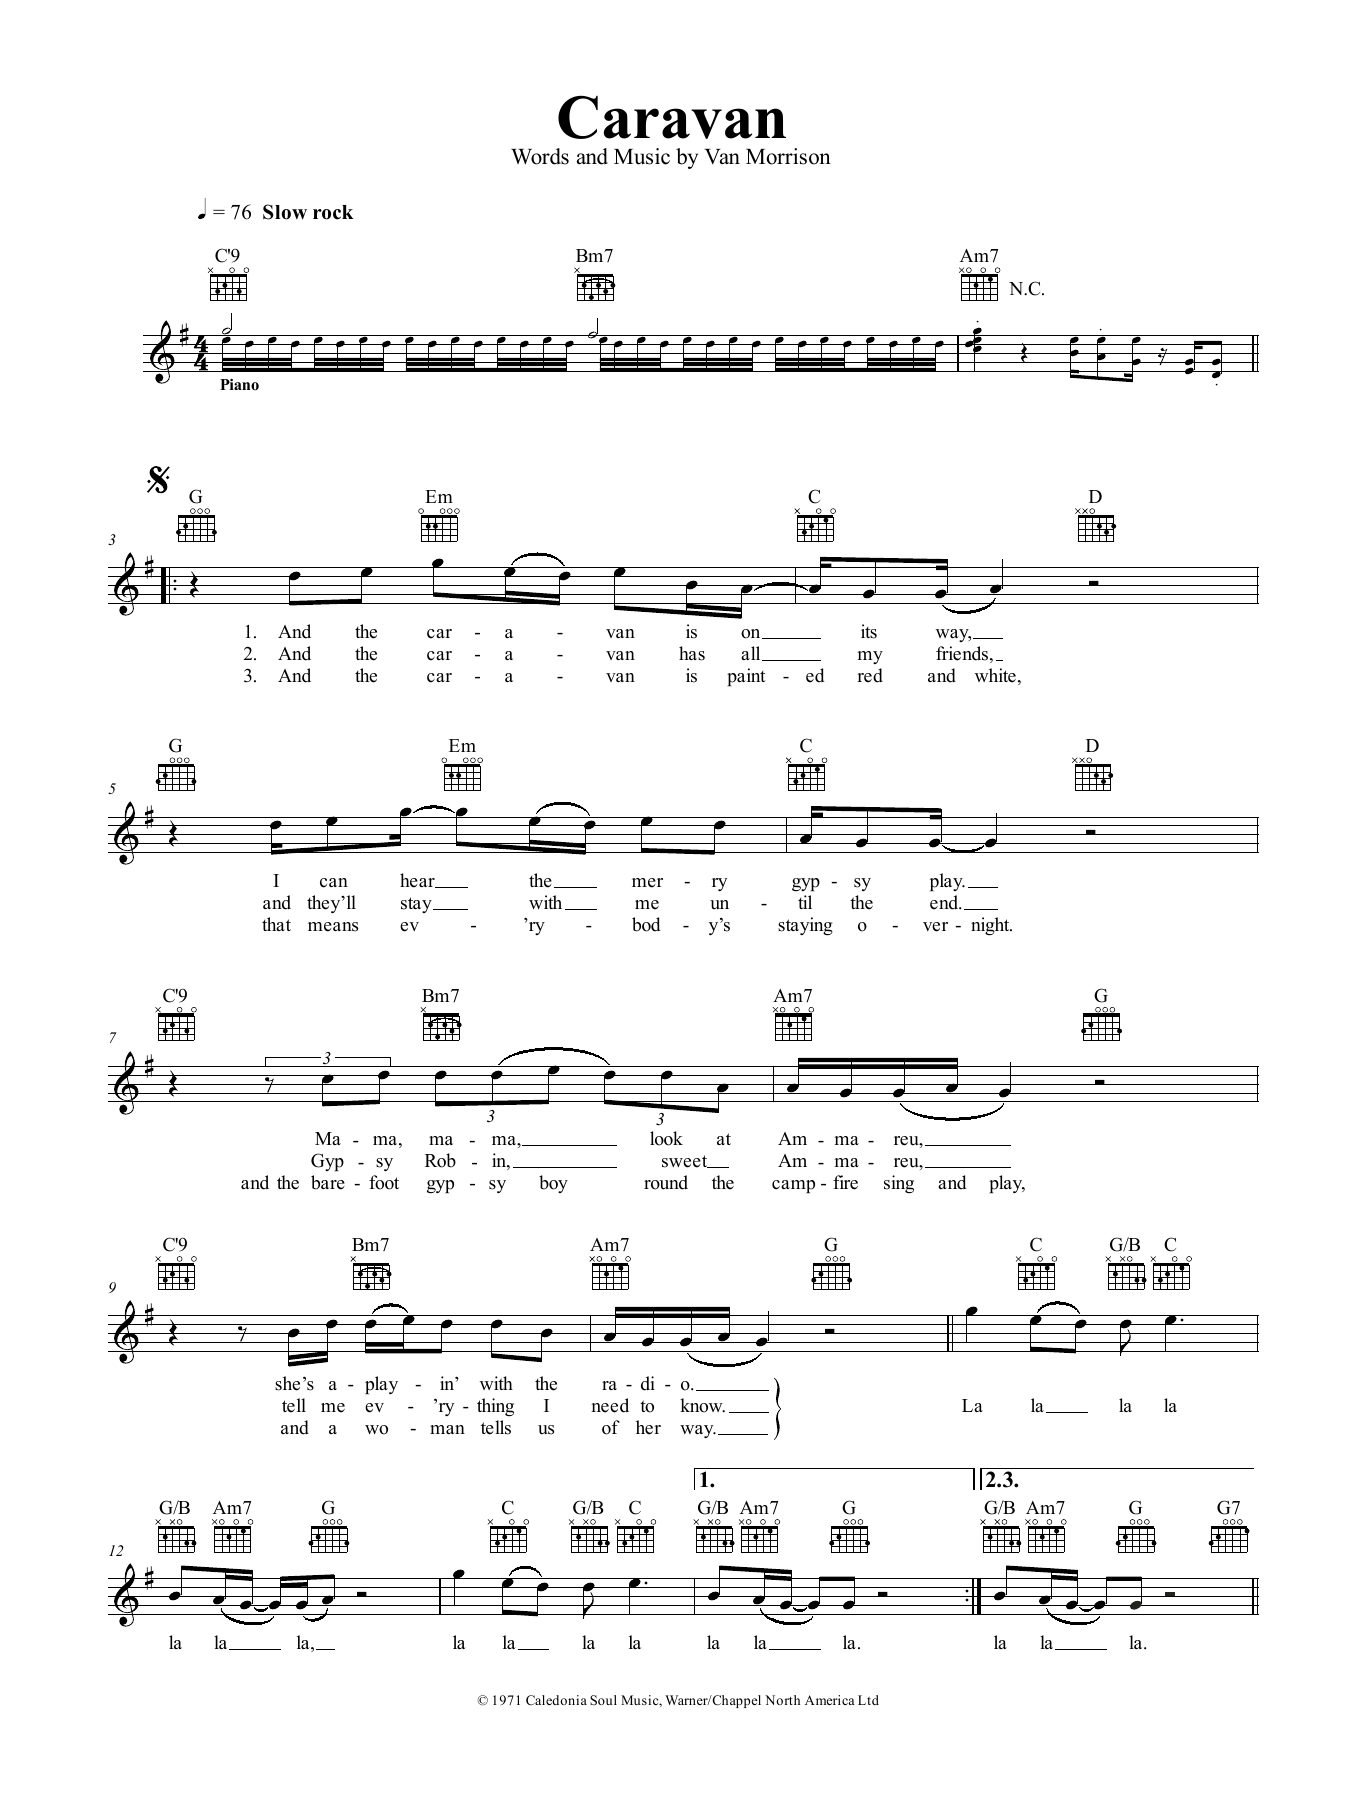 Van Morrison Caravan Sheet Music Notes & Chords for Lead Sheet / Fake Book - Download or Print PDF